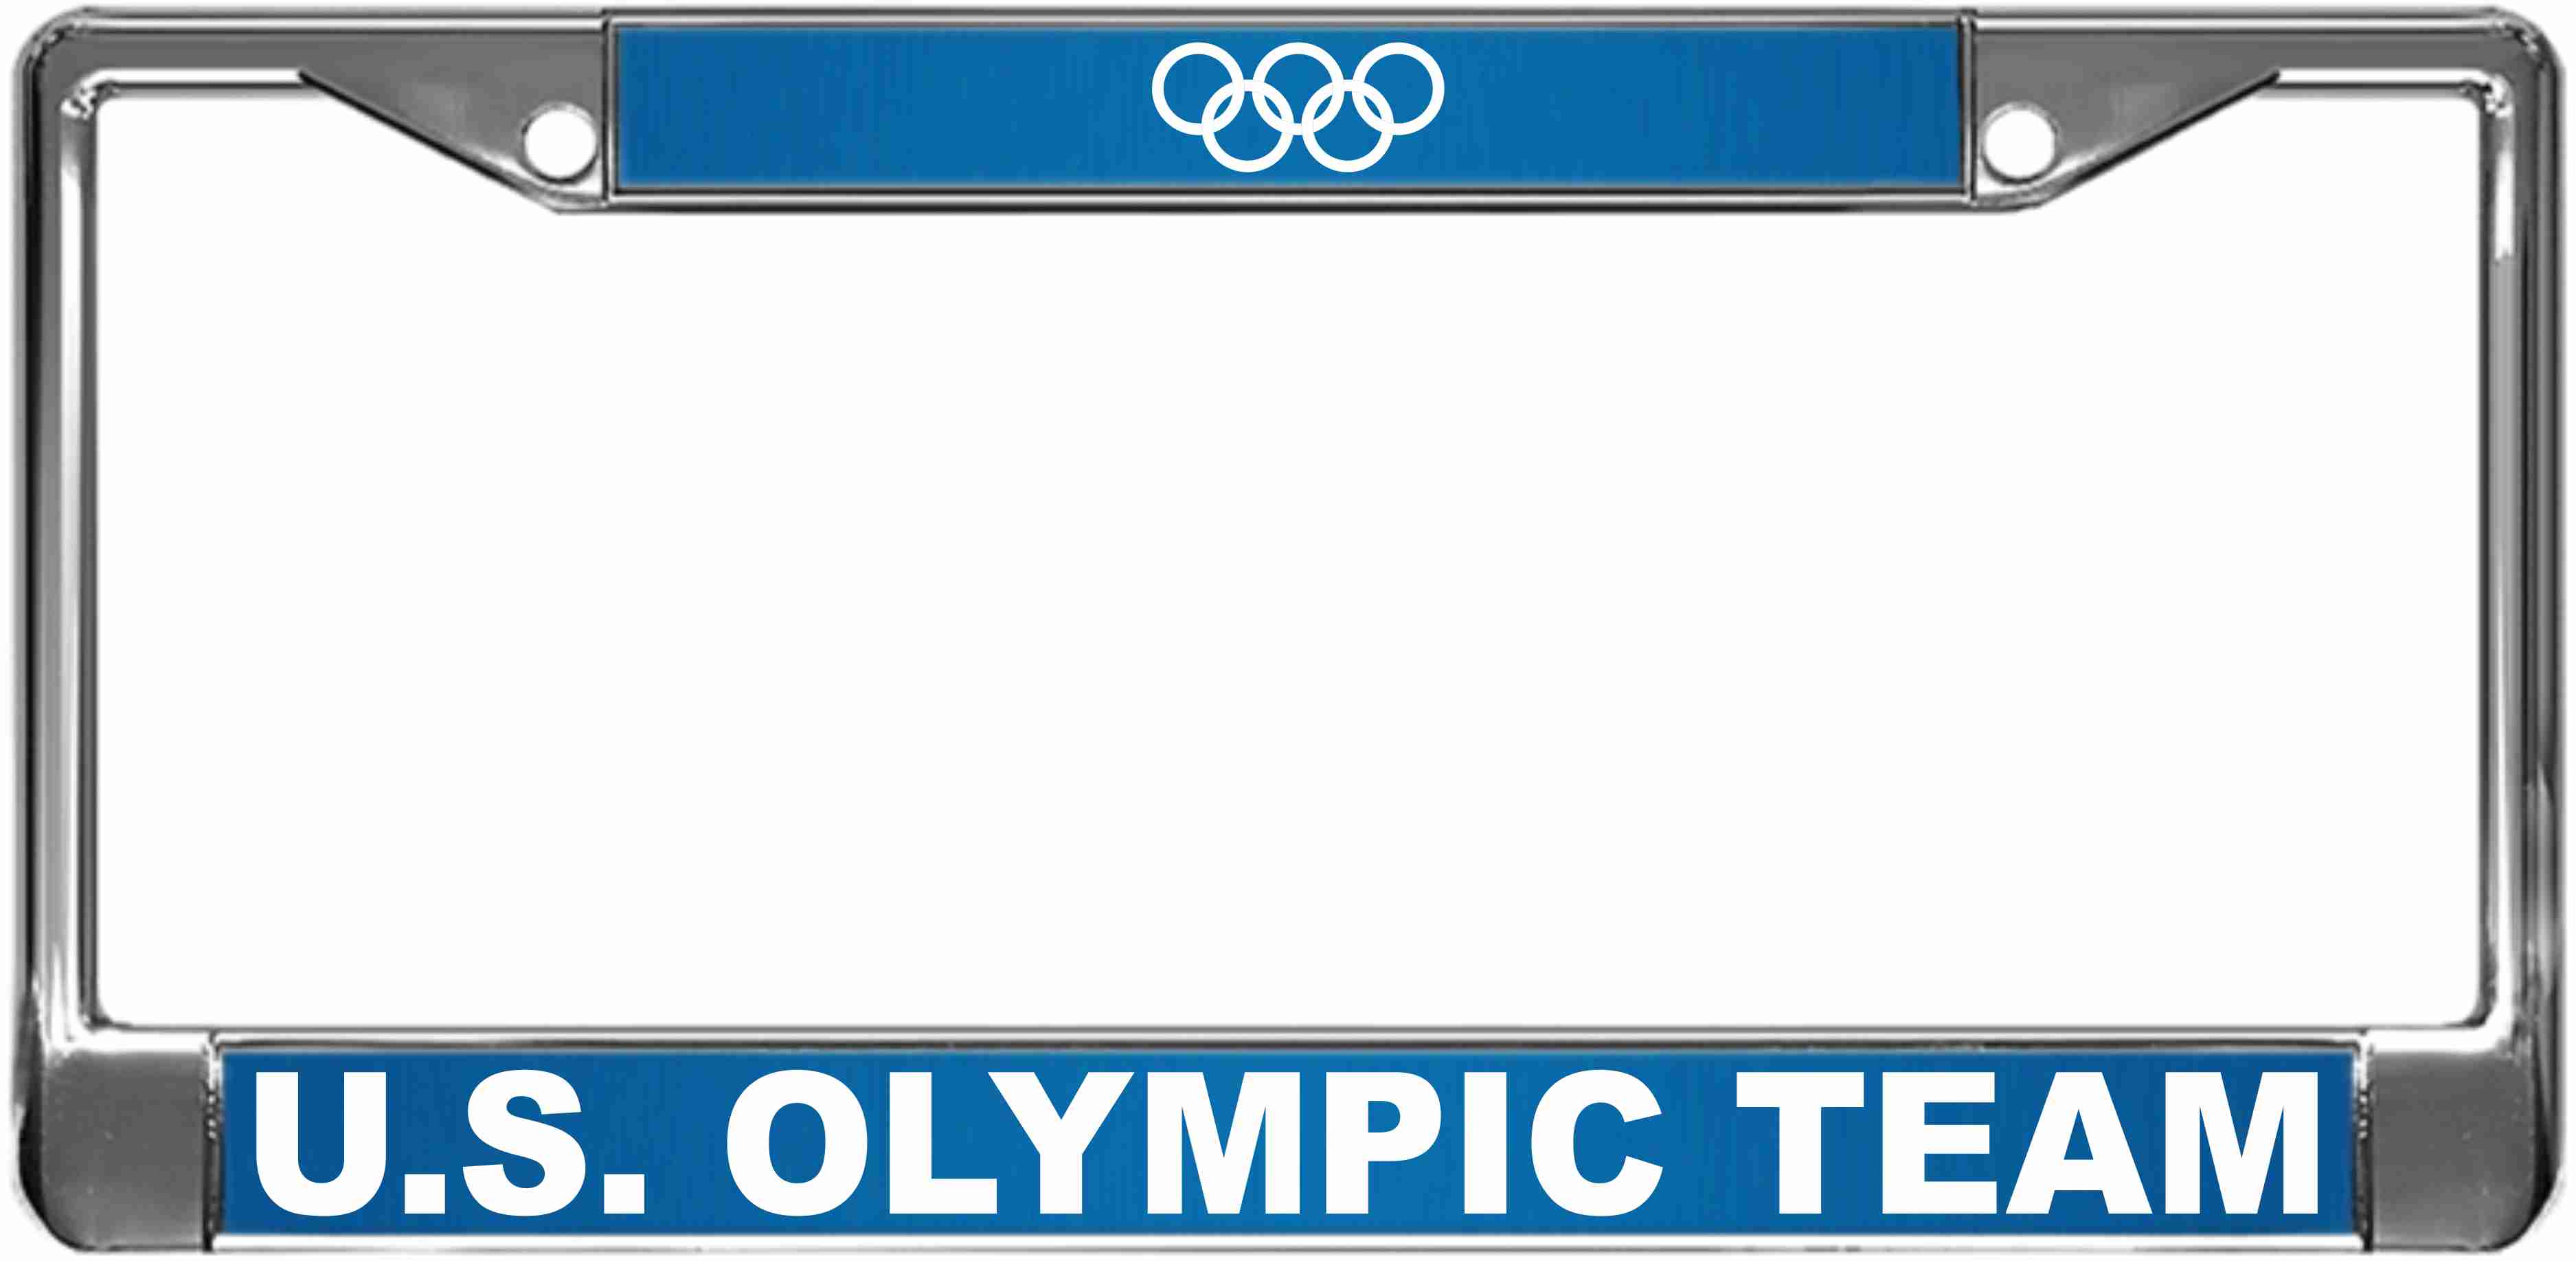 US OLYMPIC TEAM - custom metal license plate frame